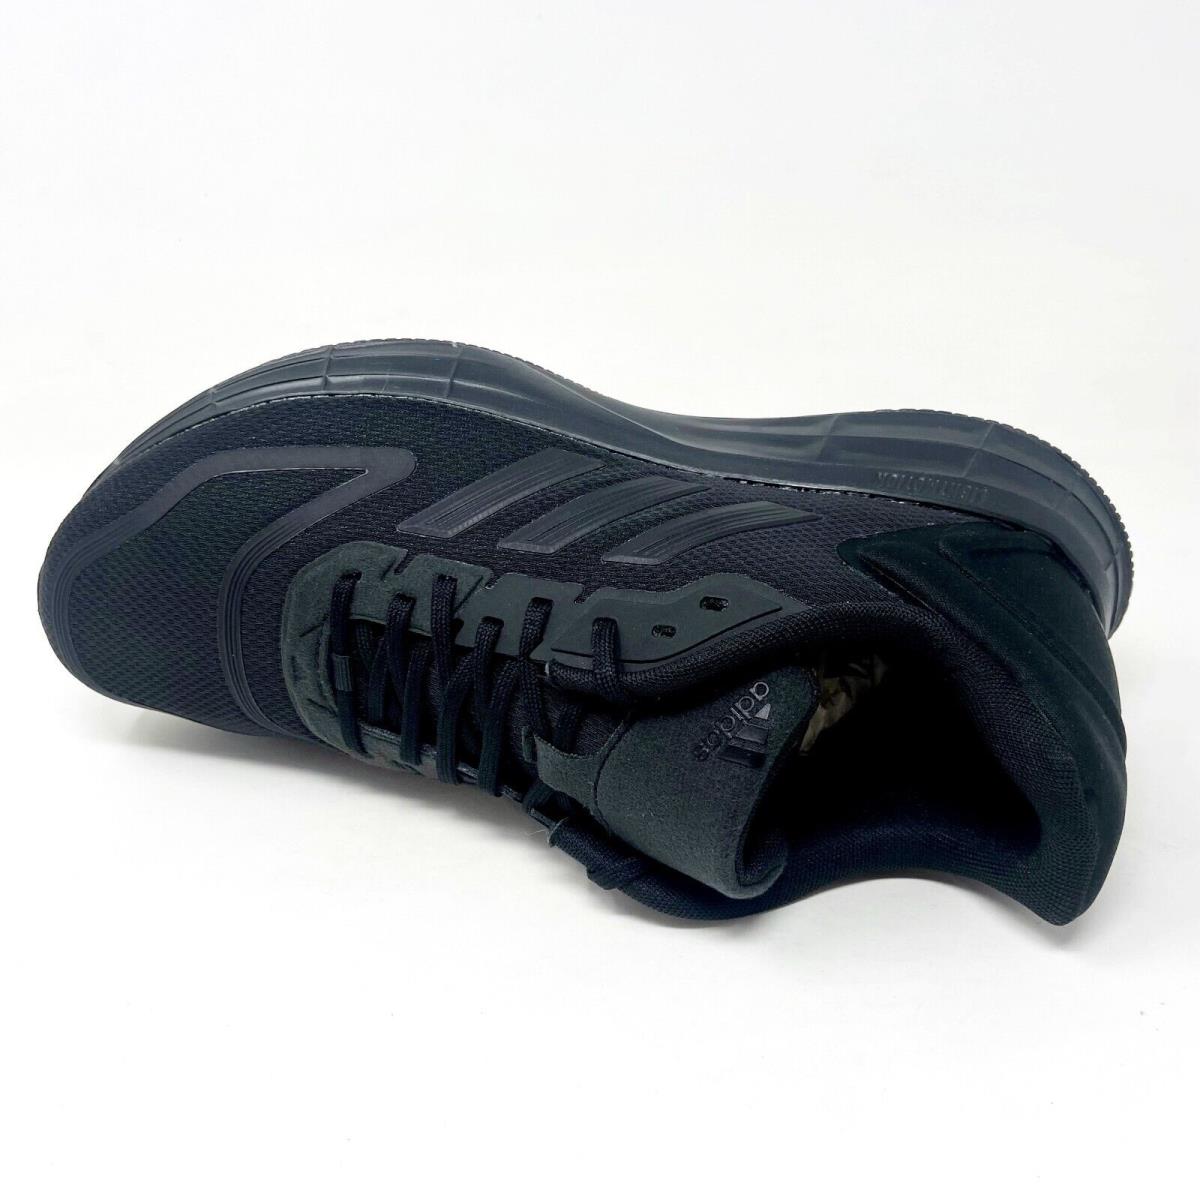 Adidas shoes Duramo - Black 2